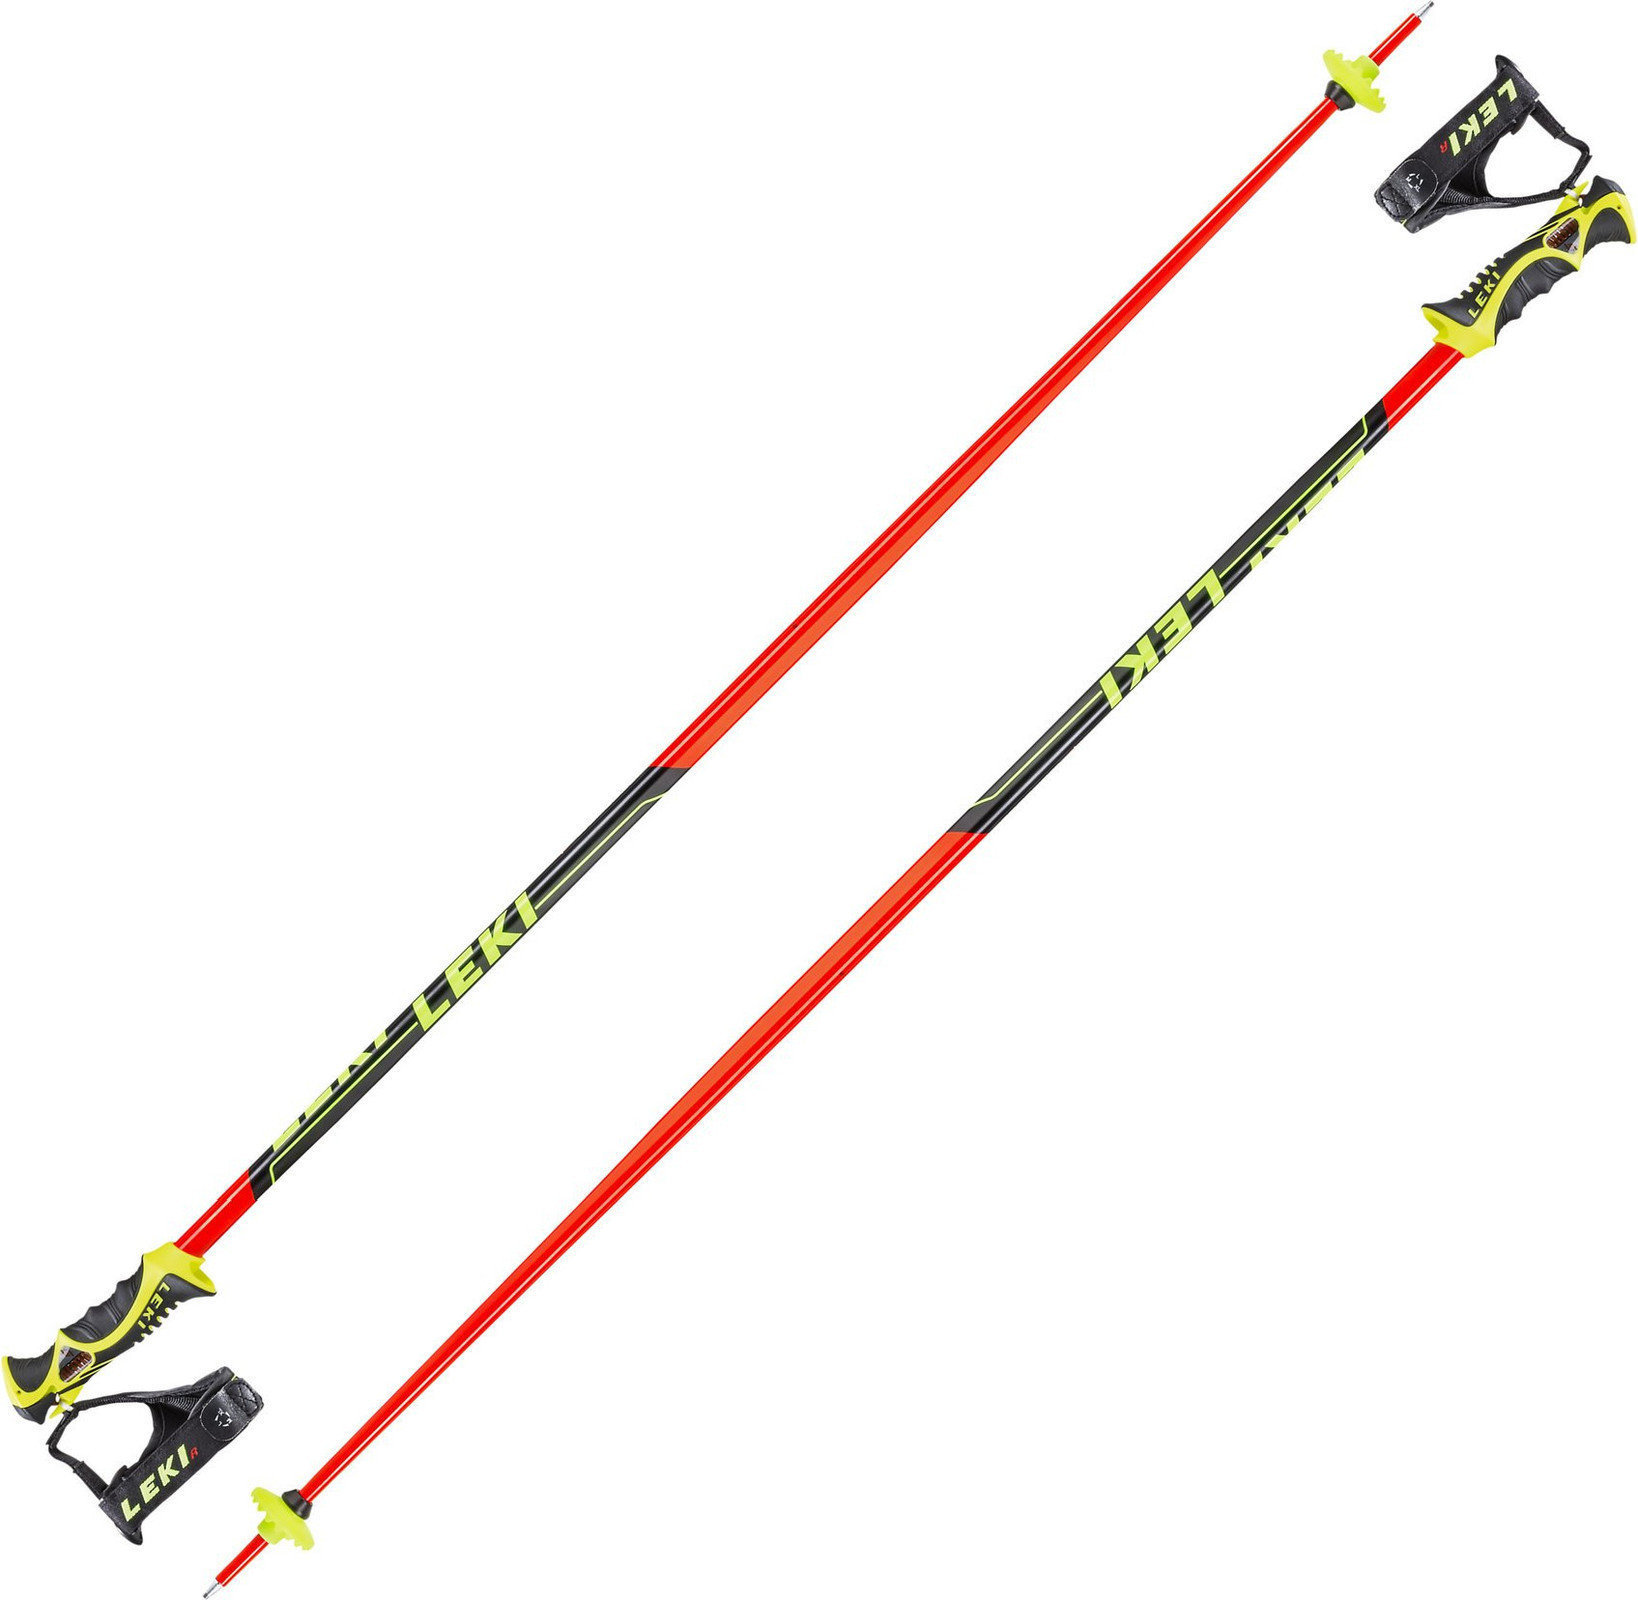 Ski Poles Leki Worldcup Racing SL Neonred/Black/White/Yellow 135 cm Ski Poles